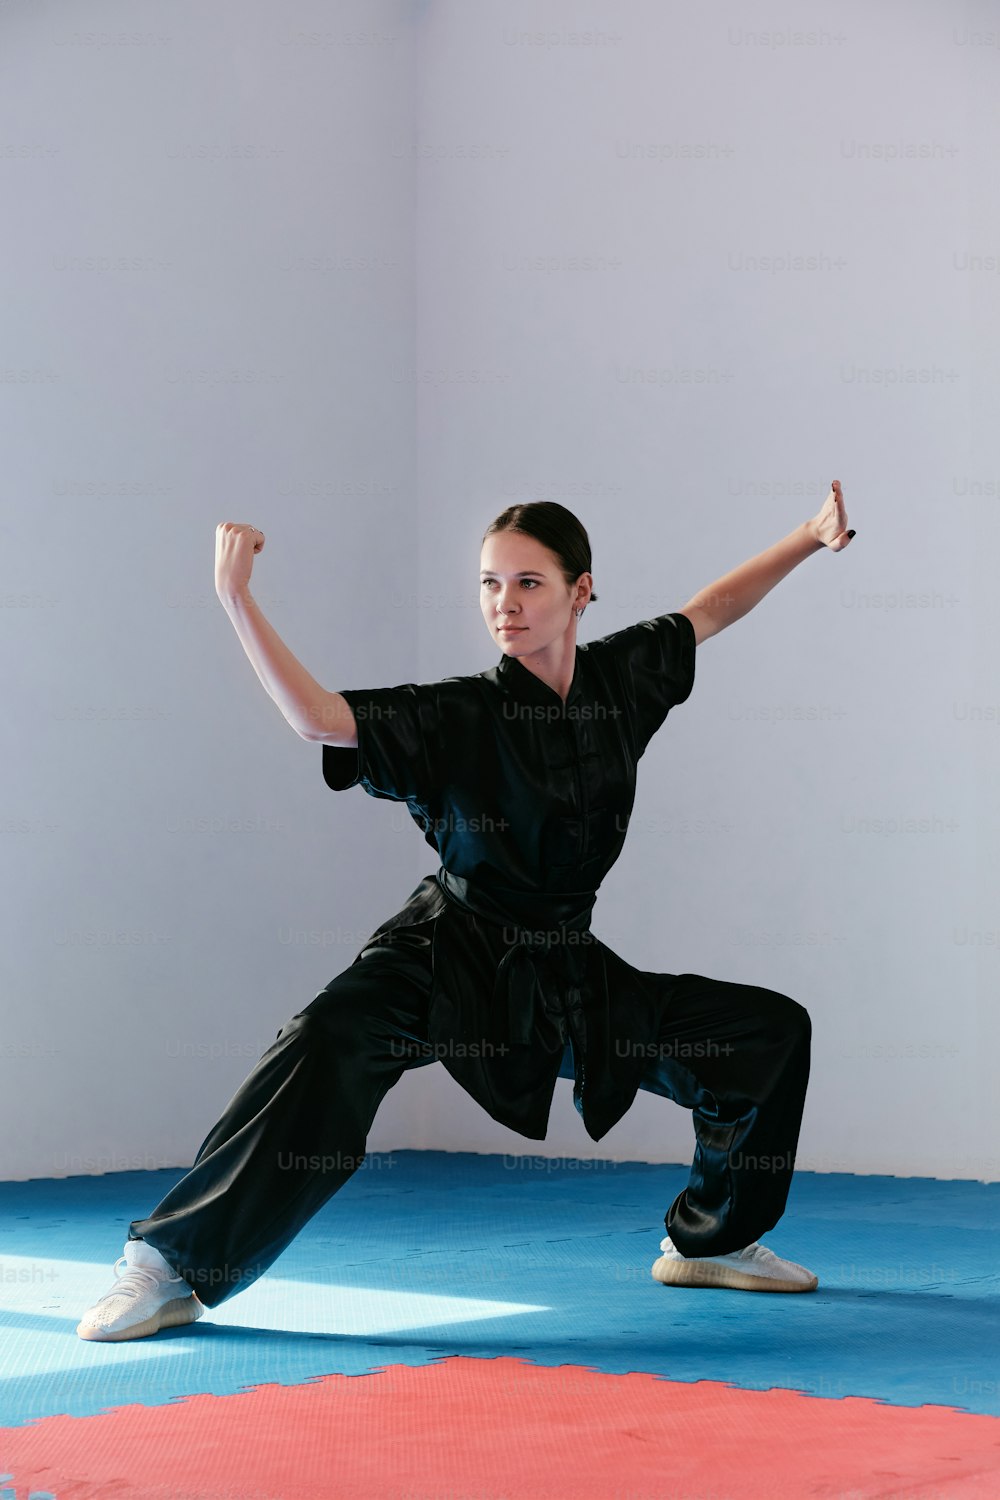 Una donna in camicia nera sta facendo una posa di karate